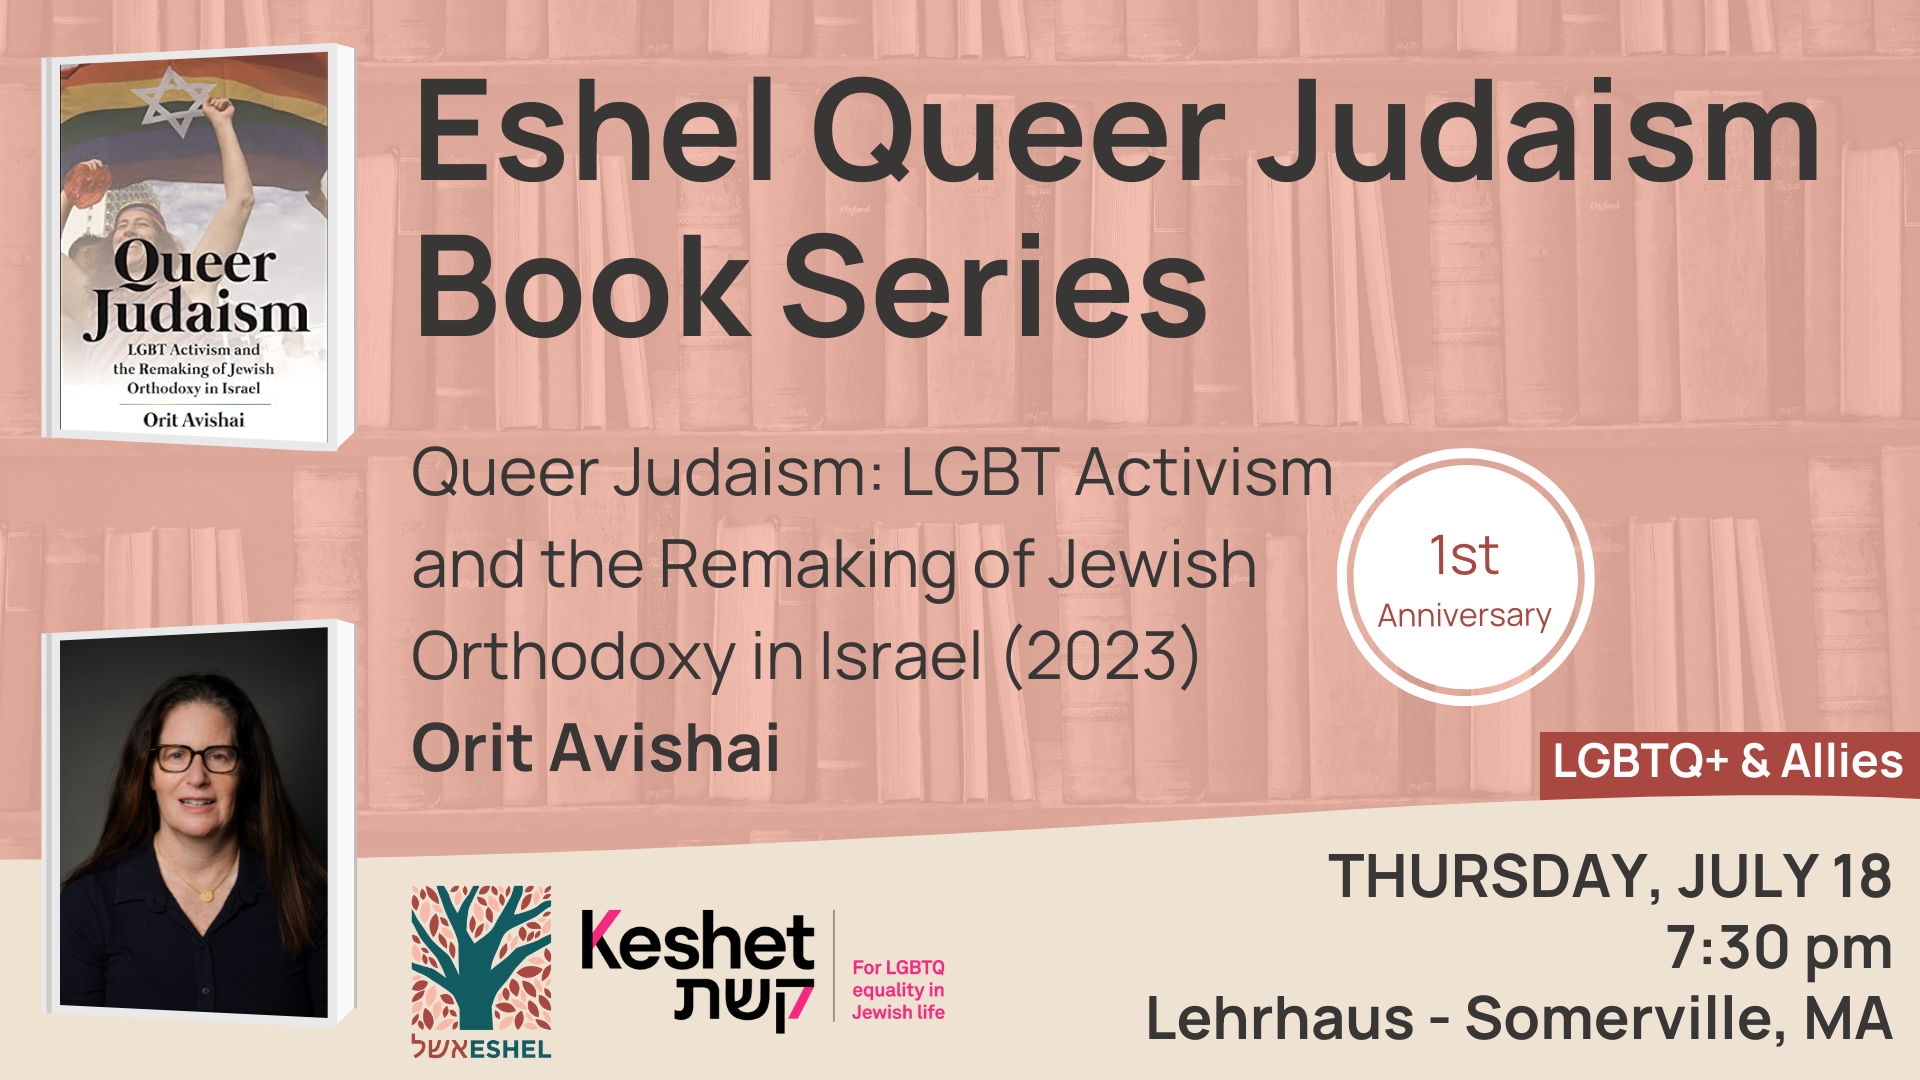 Eshel Queer Judaism Book Series - Keep Your Wives Away from Them: Orthodox Women, Unorthodox Desires (2011) Miryam Kabakov - SunDay, August 18 8:00 pm Lehrhaus - Somerville, MA